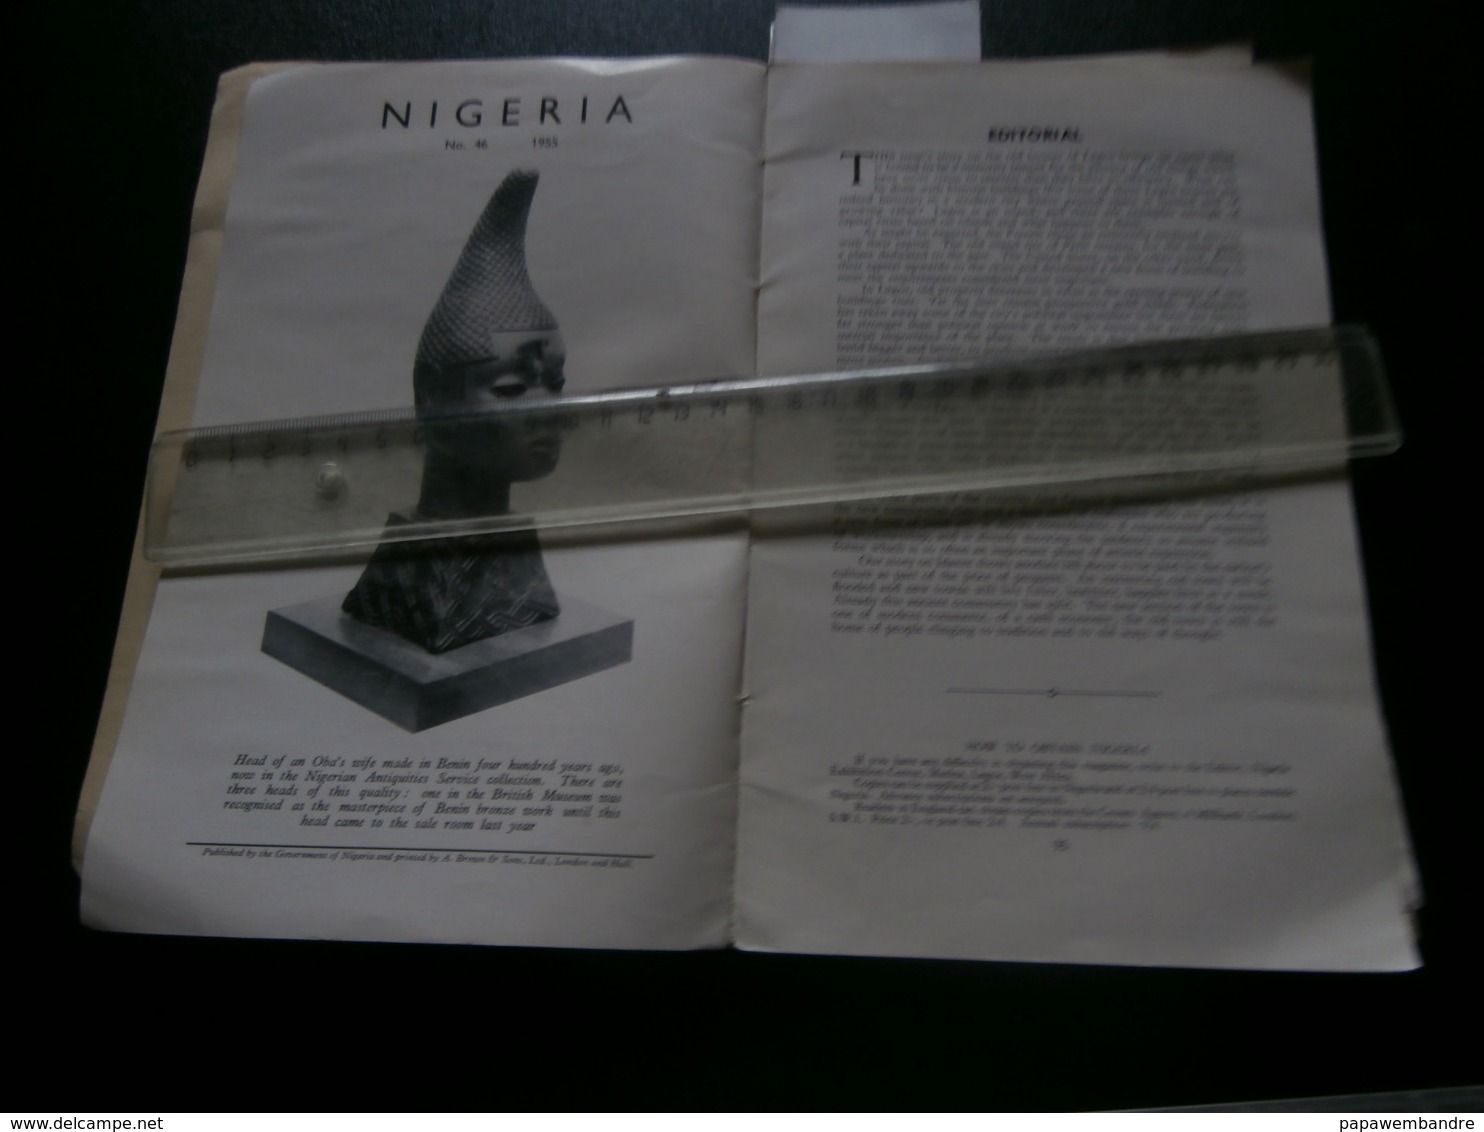 Nigeria 46 (1955) Lagos, Yoruba, Iseyin, Idanre, Ulli Beier, C B Dodwell, Murray - Geschichte